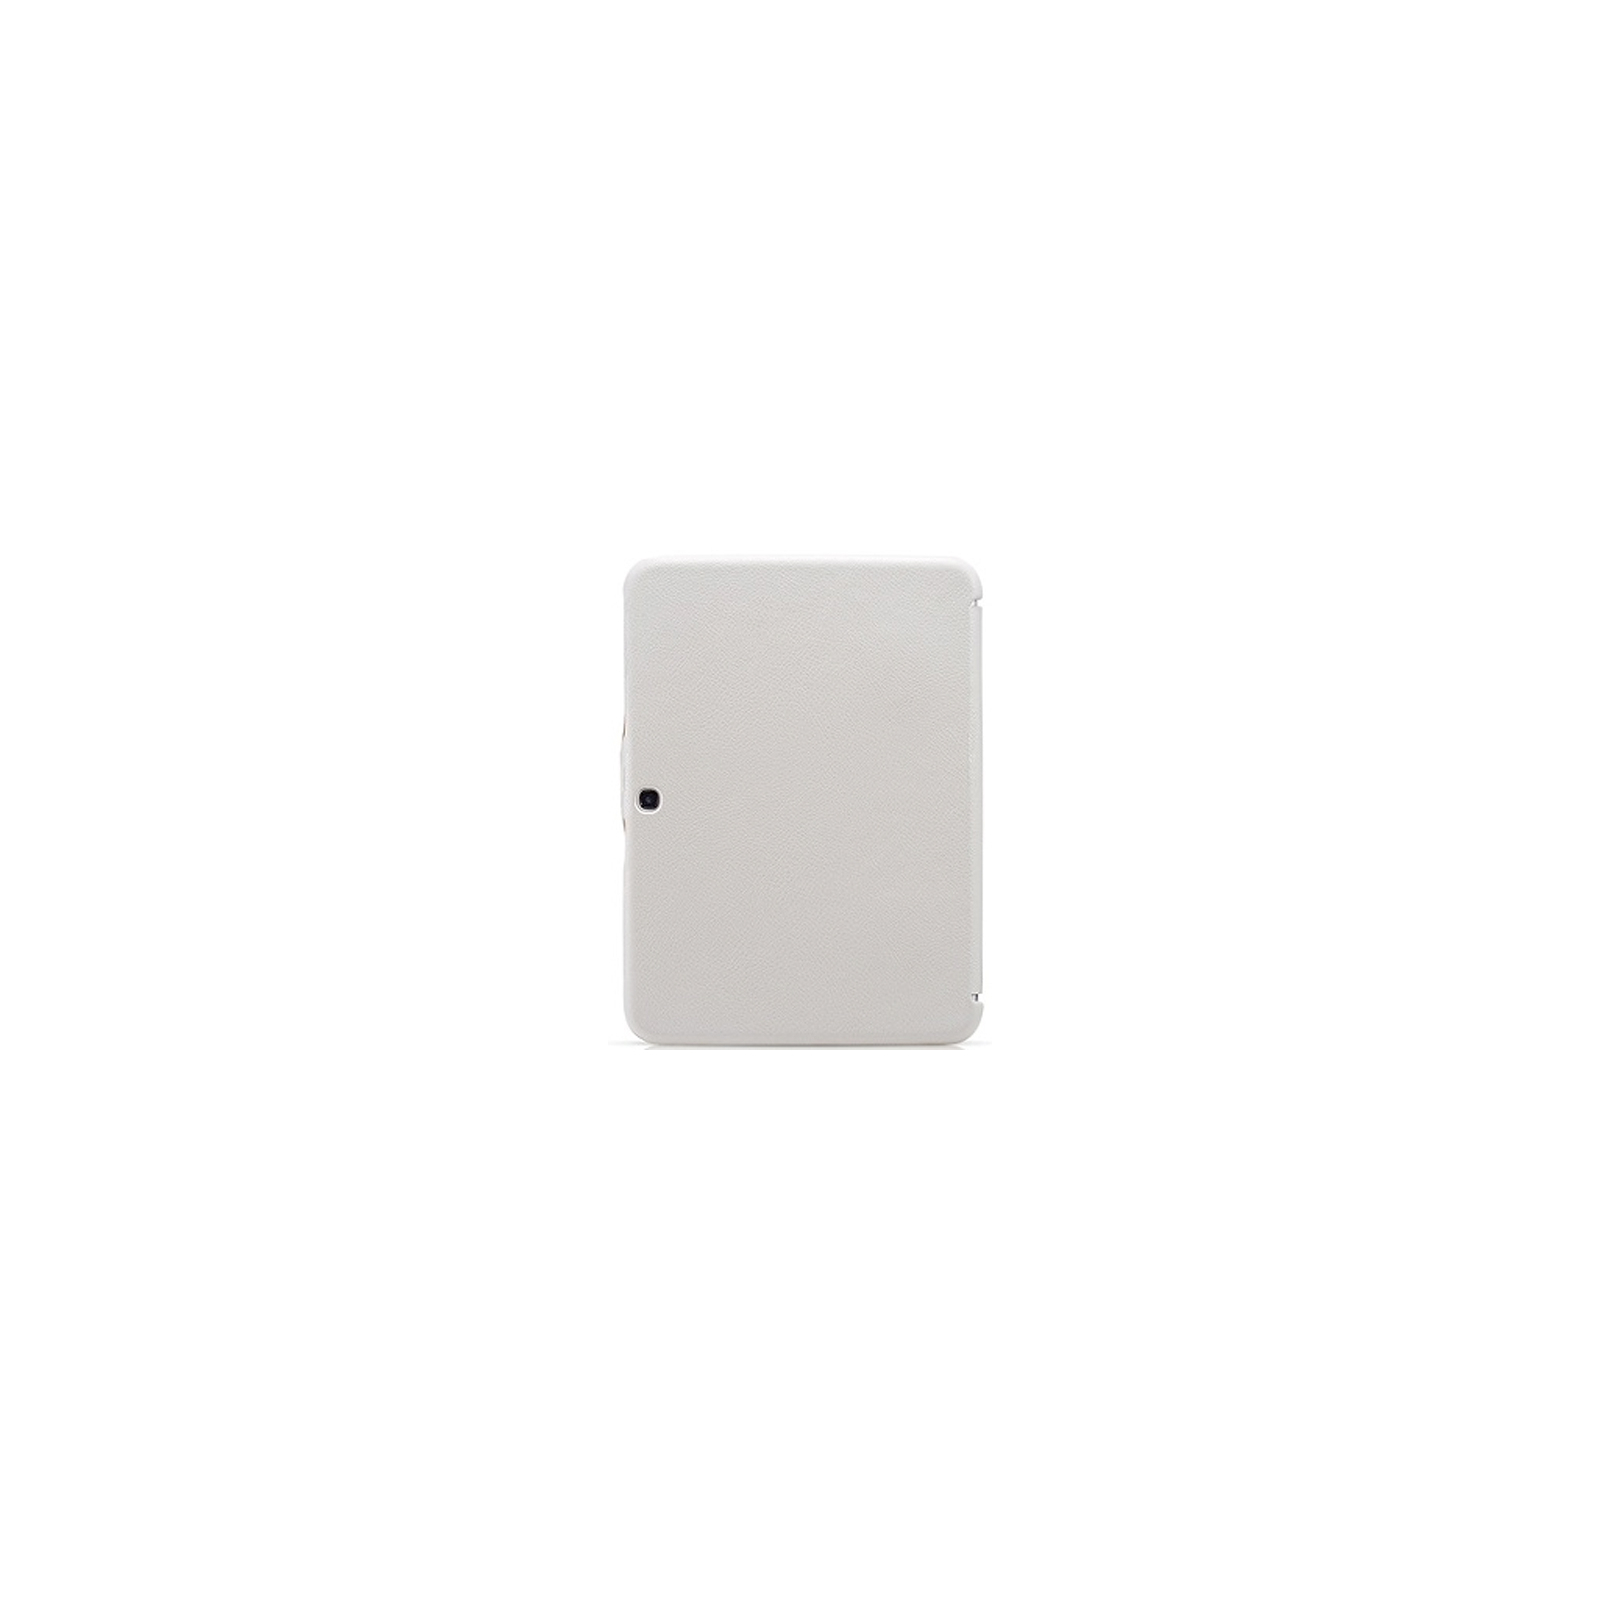 Чехол для планшета i-Carer Samsung Galaxy Tab3 P5200/5210 10.1 White (RS521001WH) изображение 2